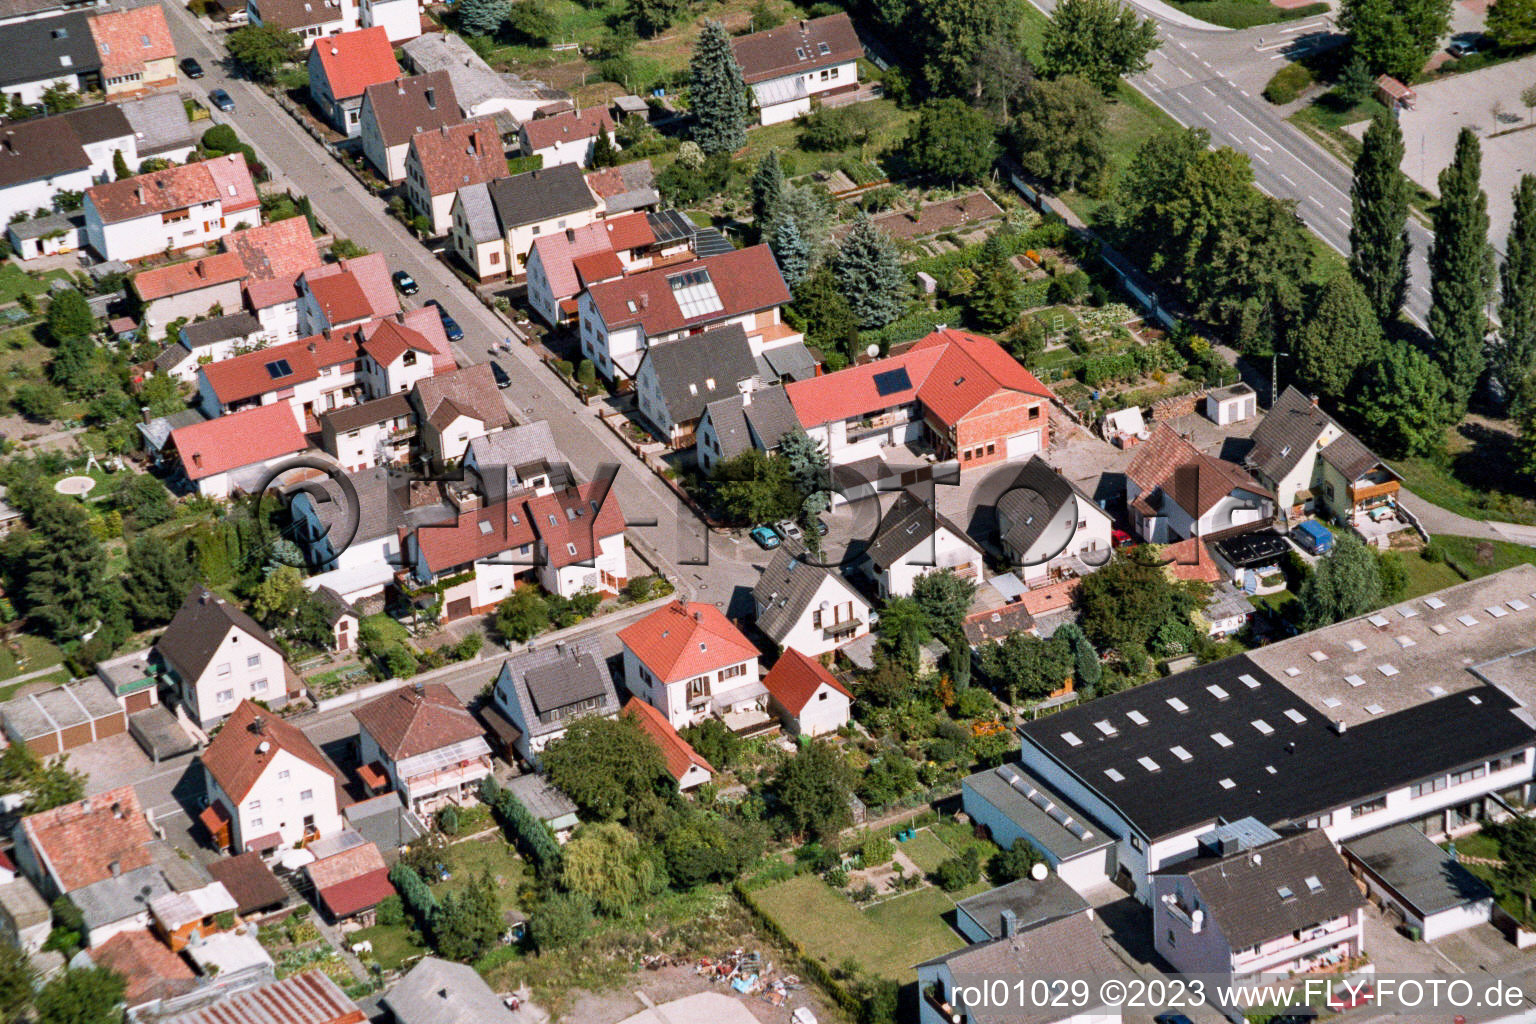 Aerial view of Südendstrasse Lindenstr in Kandel in the state Rhineland-Palatinate, Germany